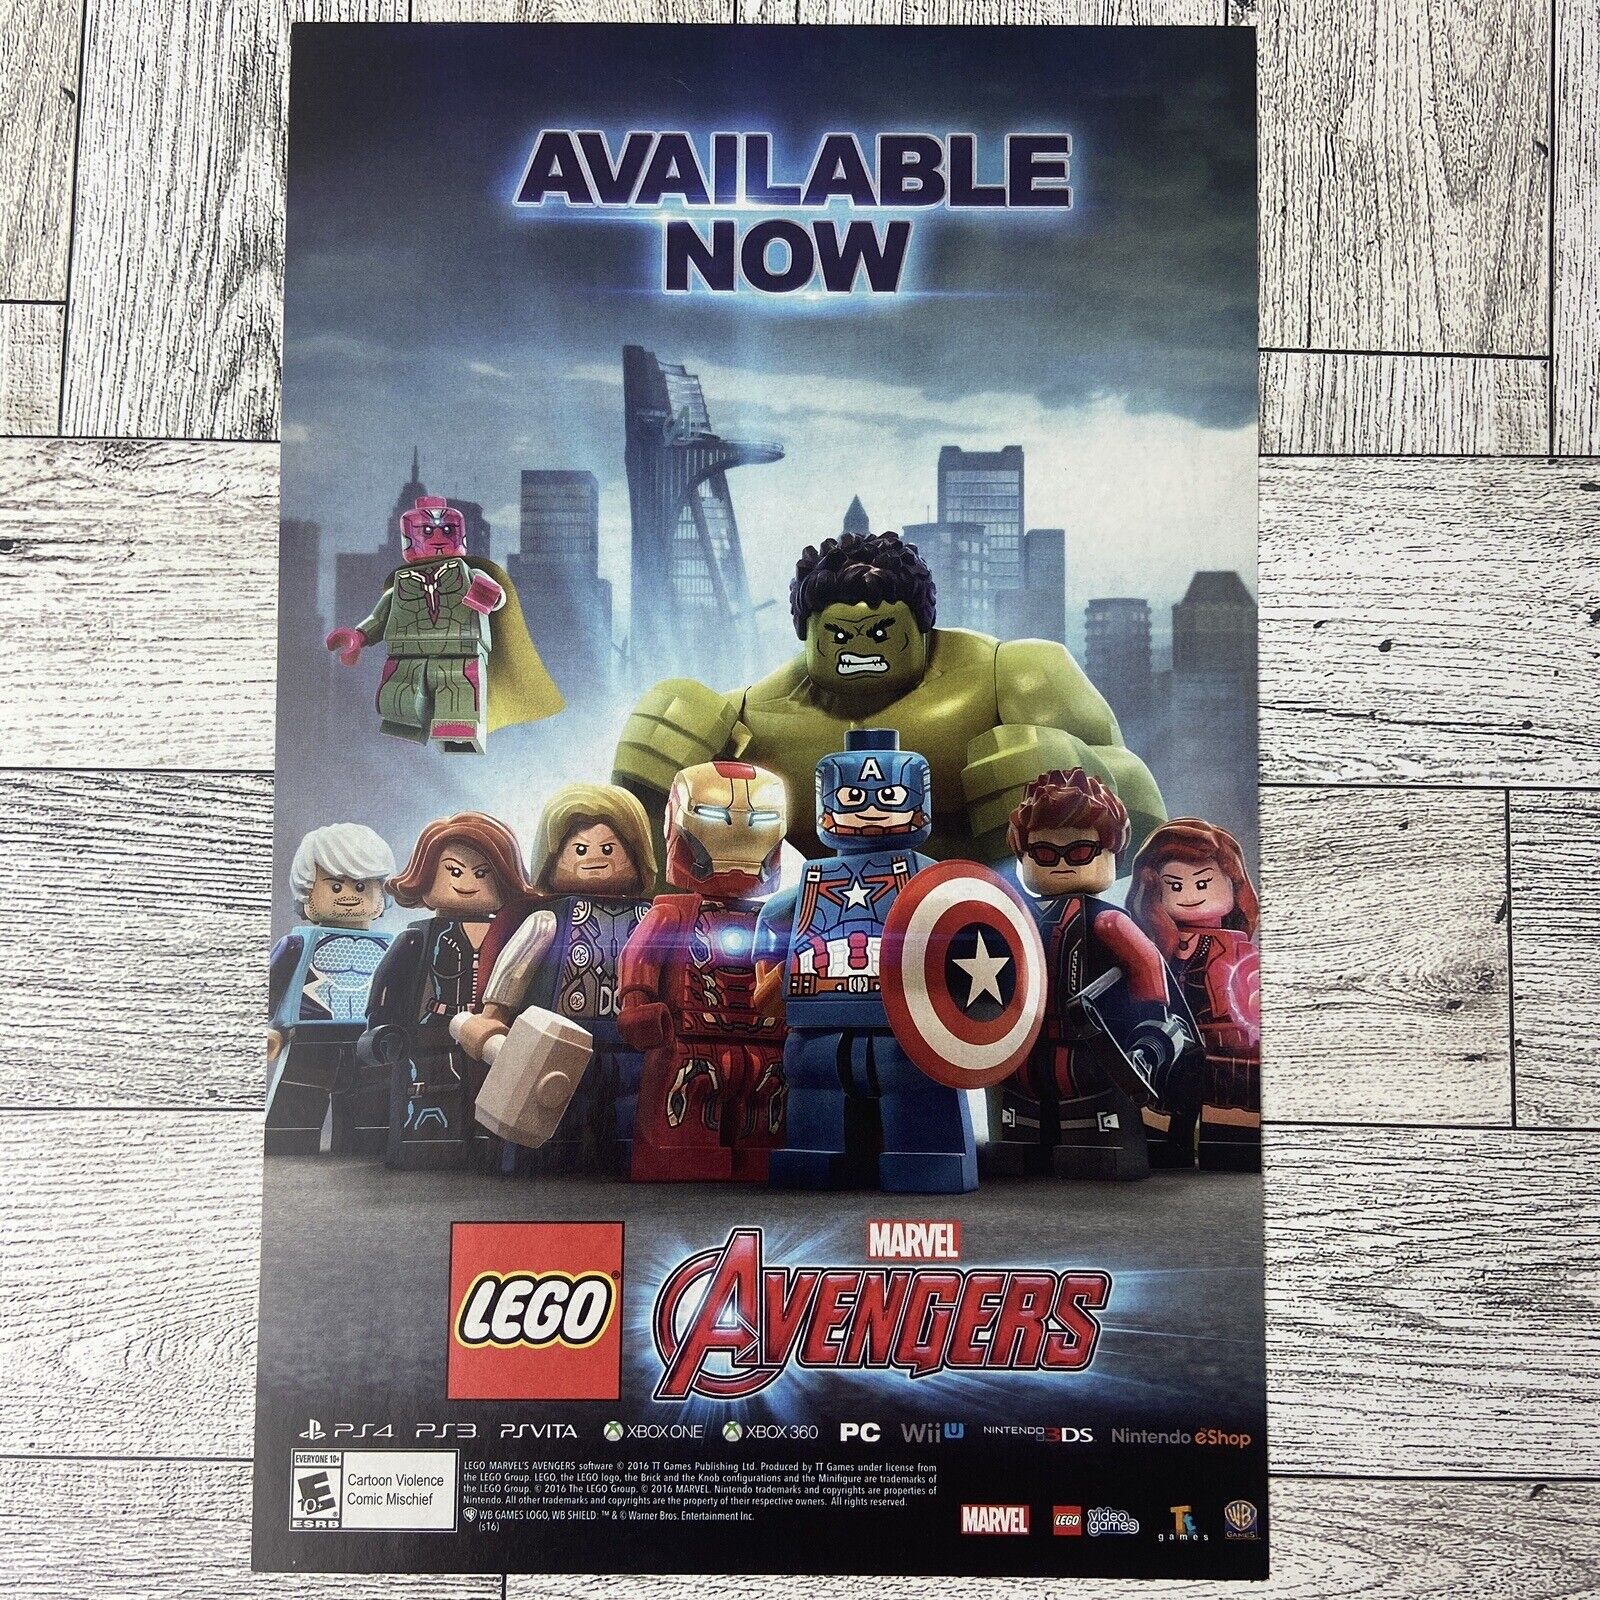 Lego Avengers Print Ad Wall Art Marvel Promo Xbox Nintendo PS3 Wii PC Ephemera